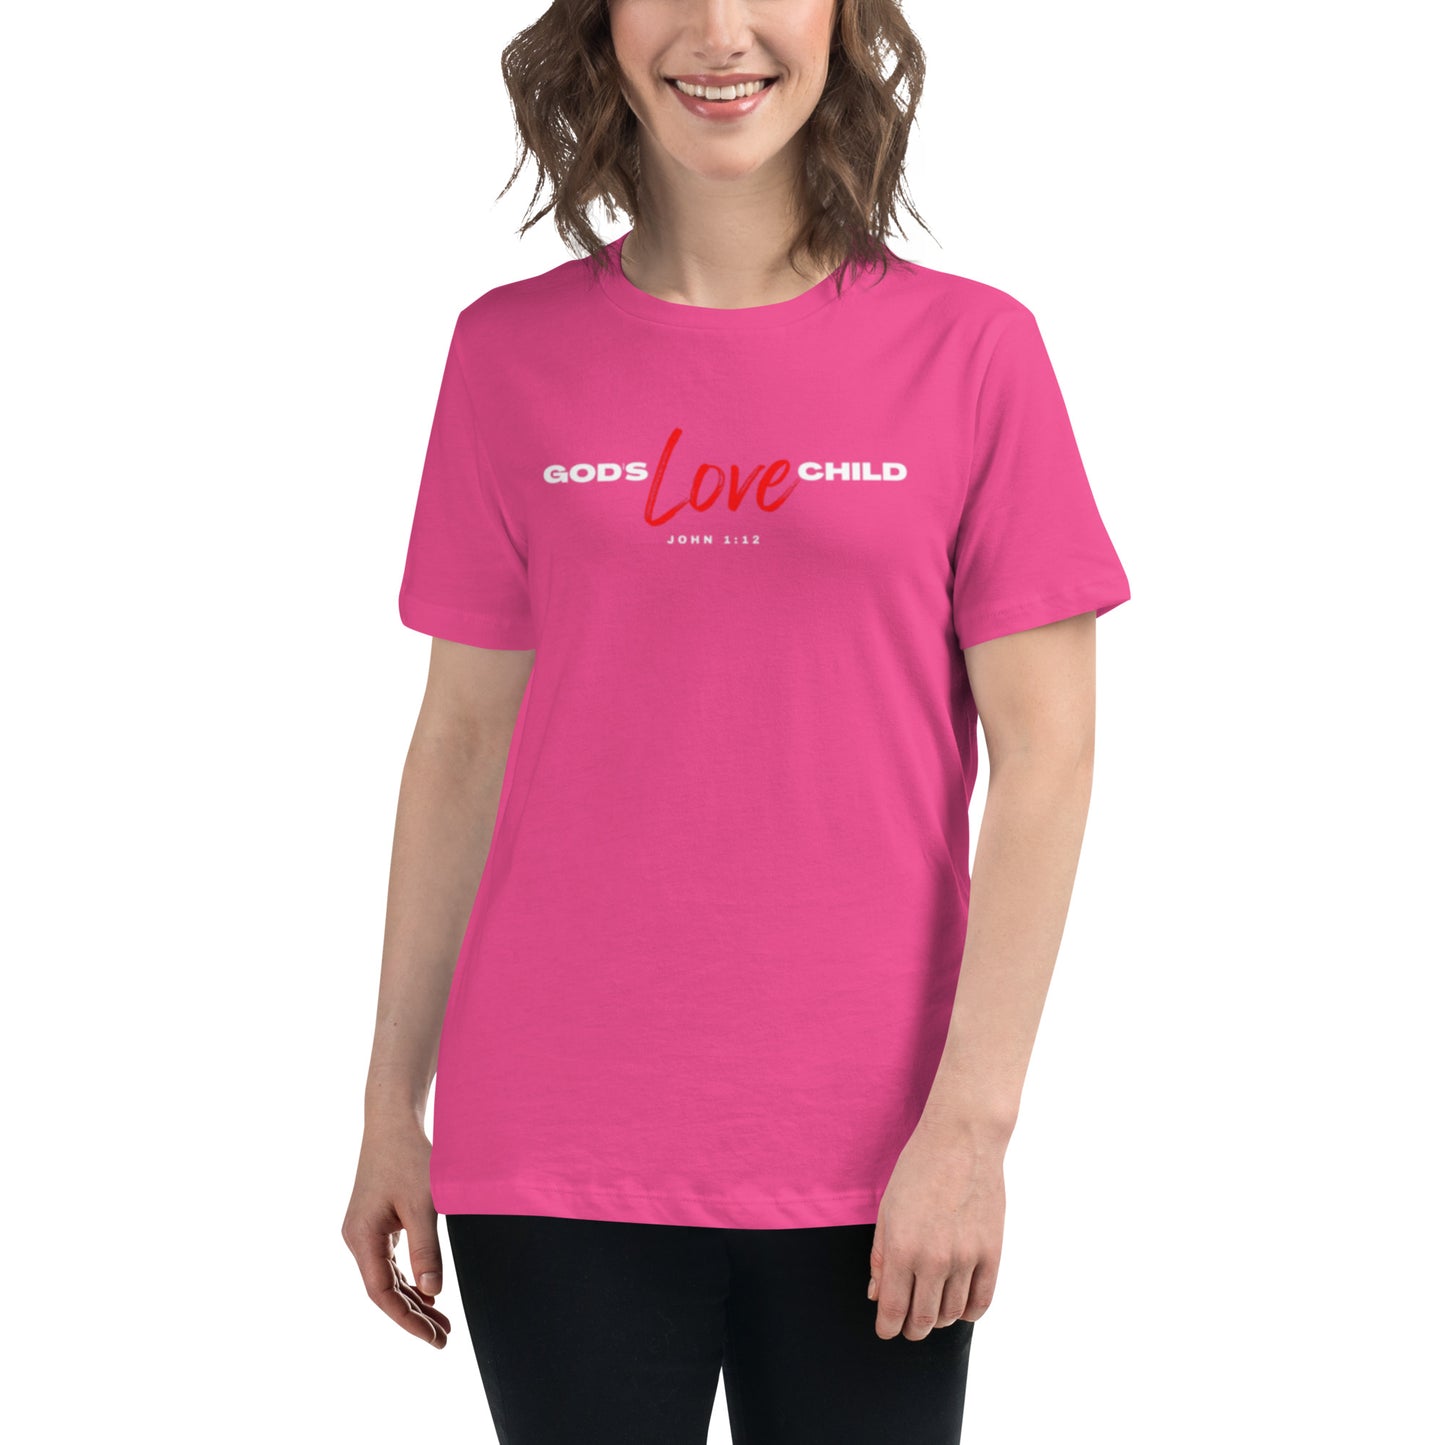 God's Love Child - Women's Relaxed T-Shirt